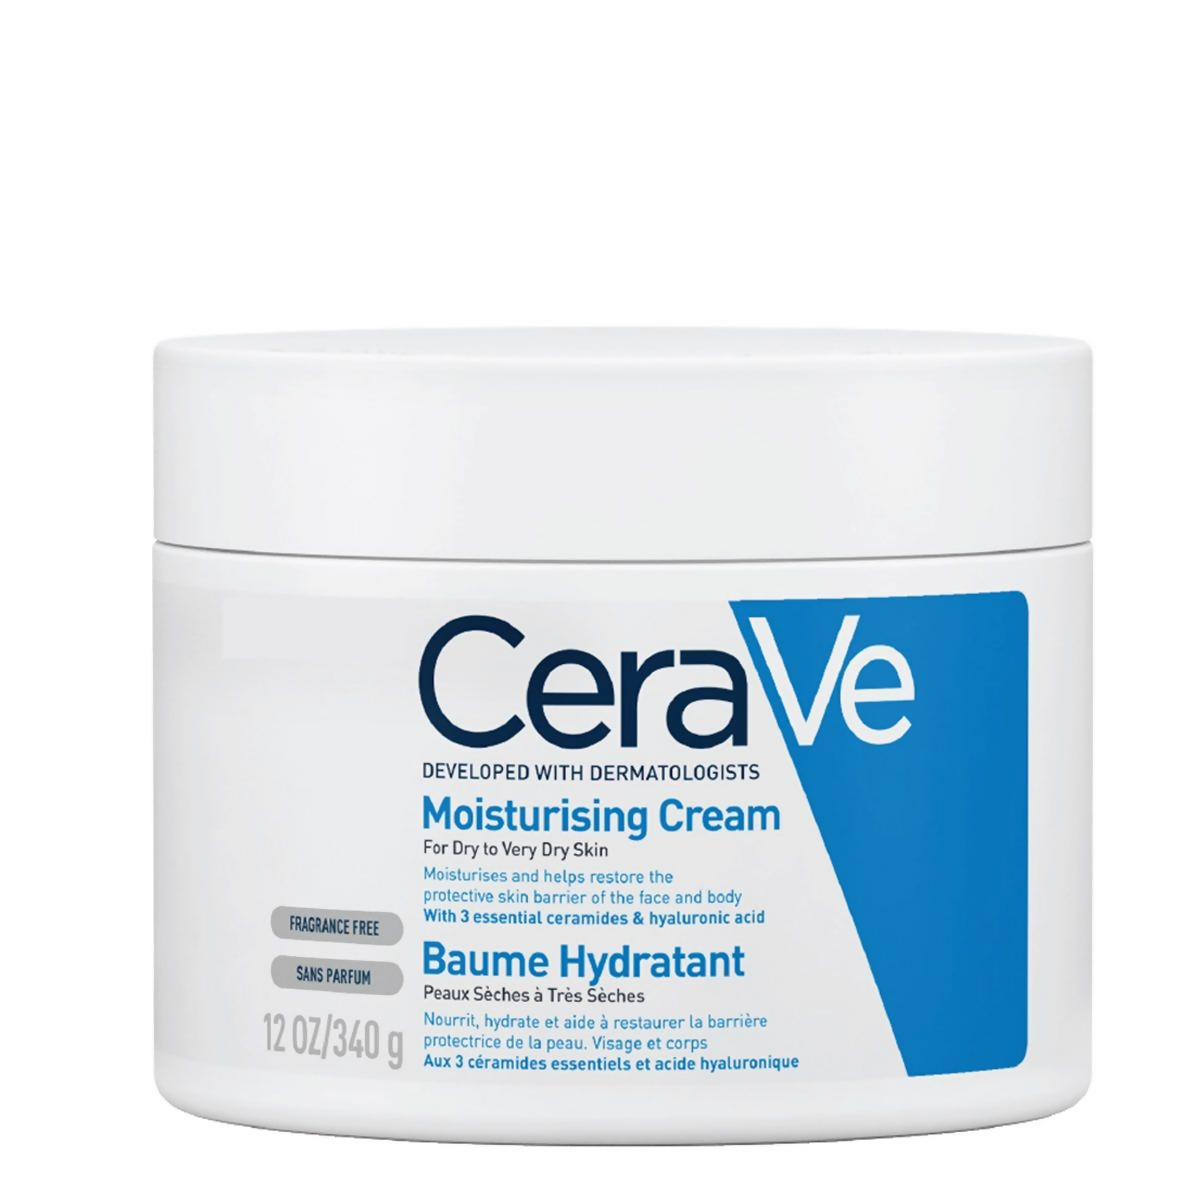 Cerave Moisturising Cream for Dry to Very Dry Skin - BUDNEN